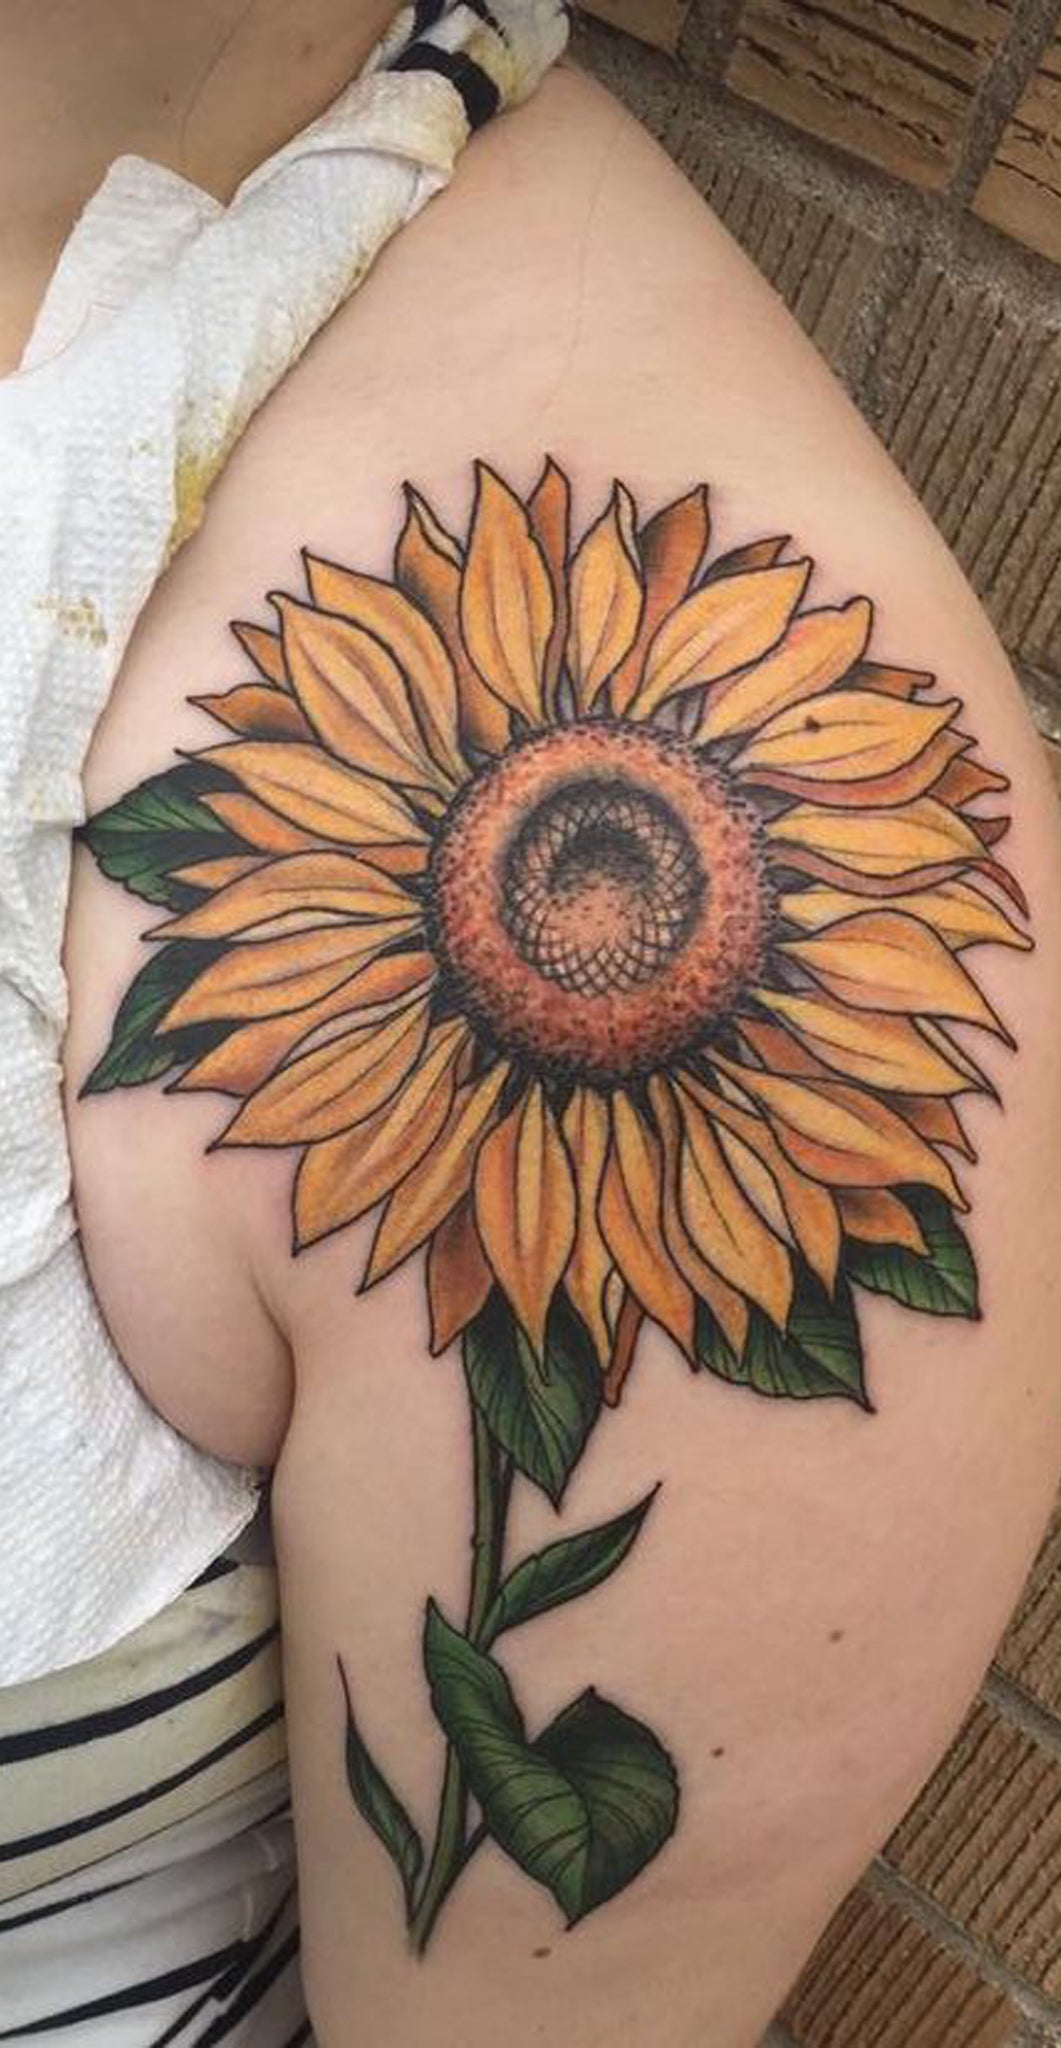 Sunflower Shoulder Tattoo Ideas for Women - Colorful Realistic Arm Tat - ideas del tatuaje de la flor del hombro - www.MyBodiArt.com #tattoos